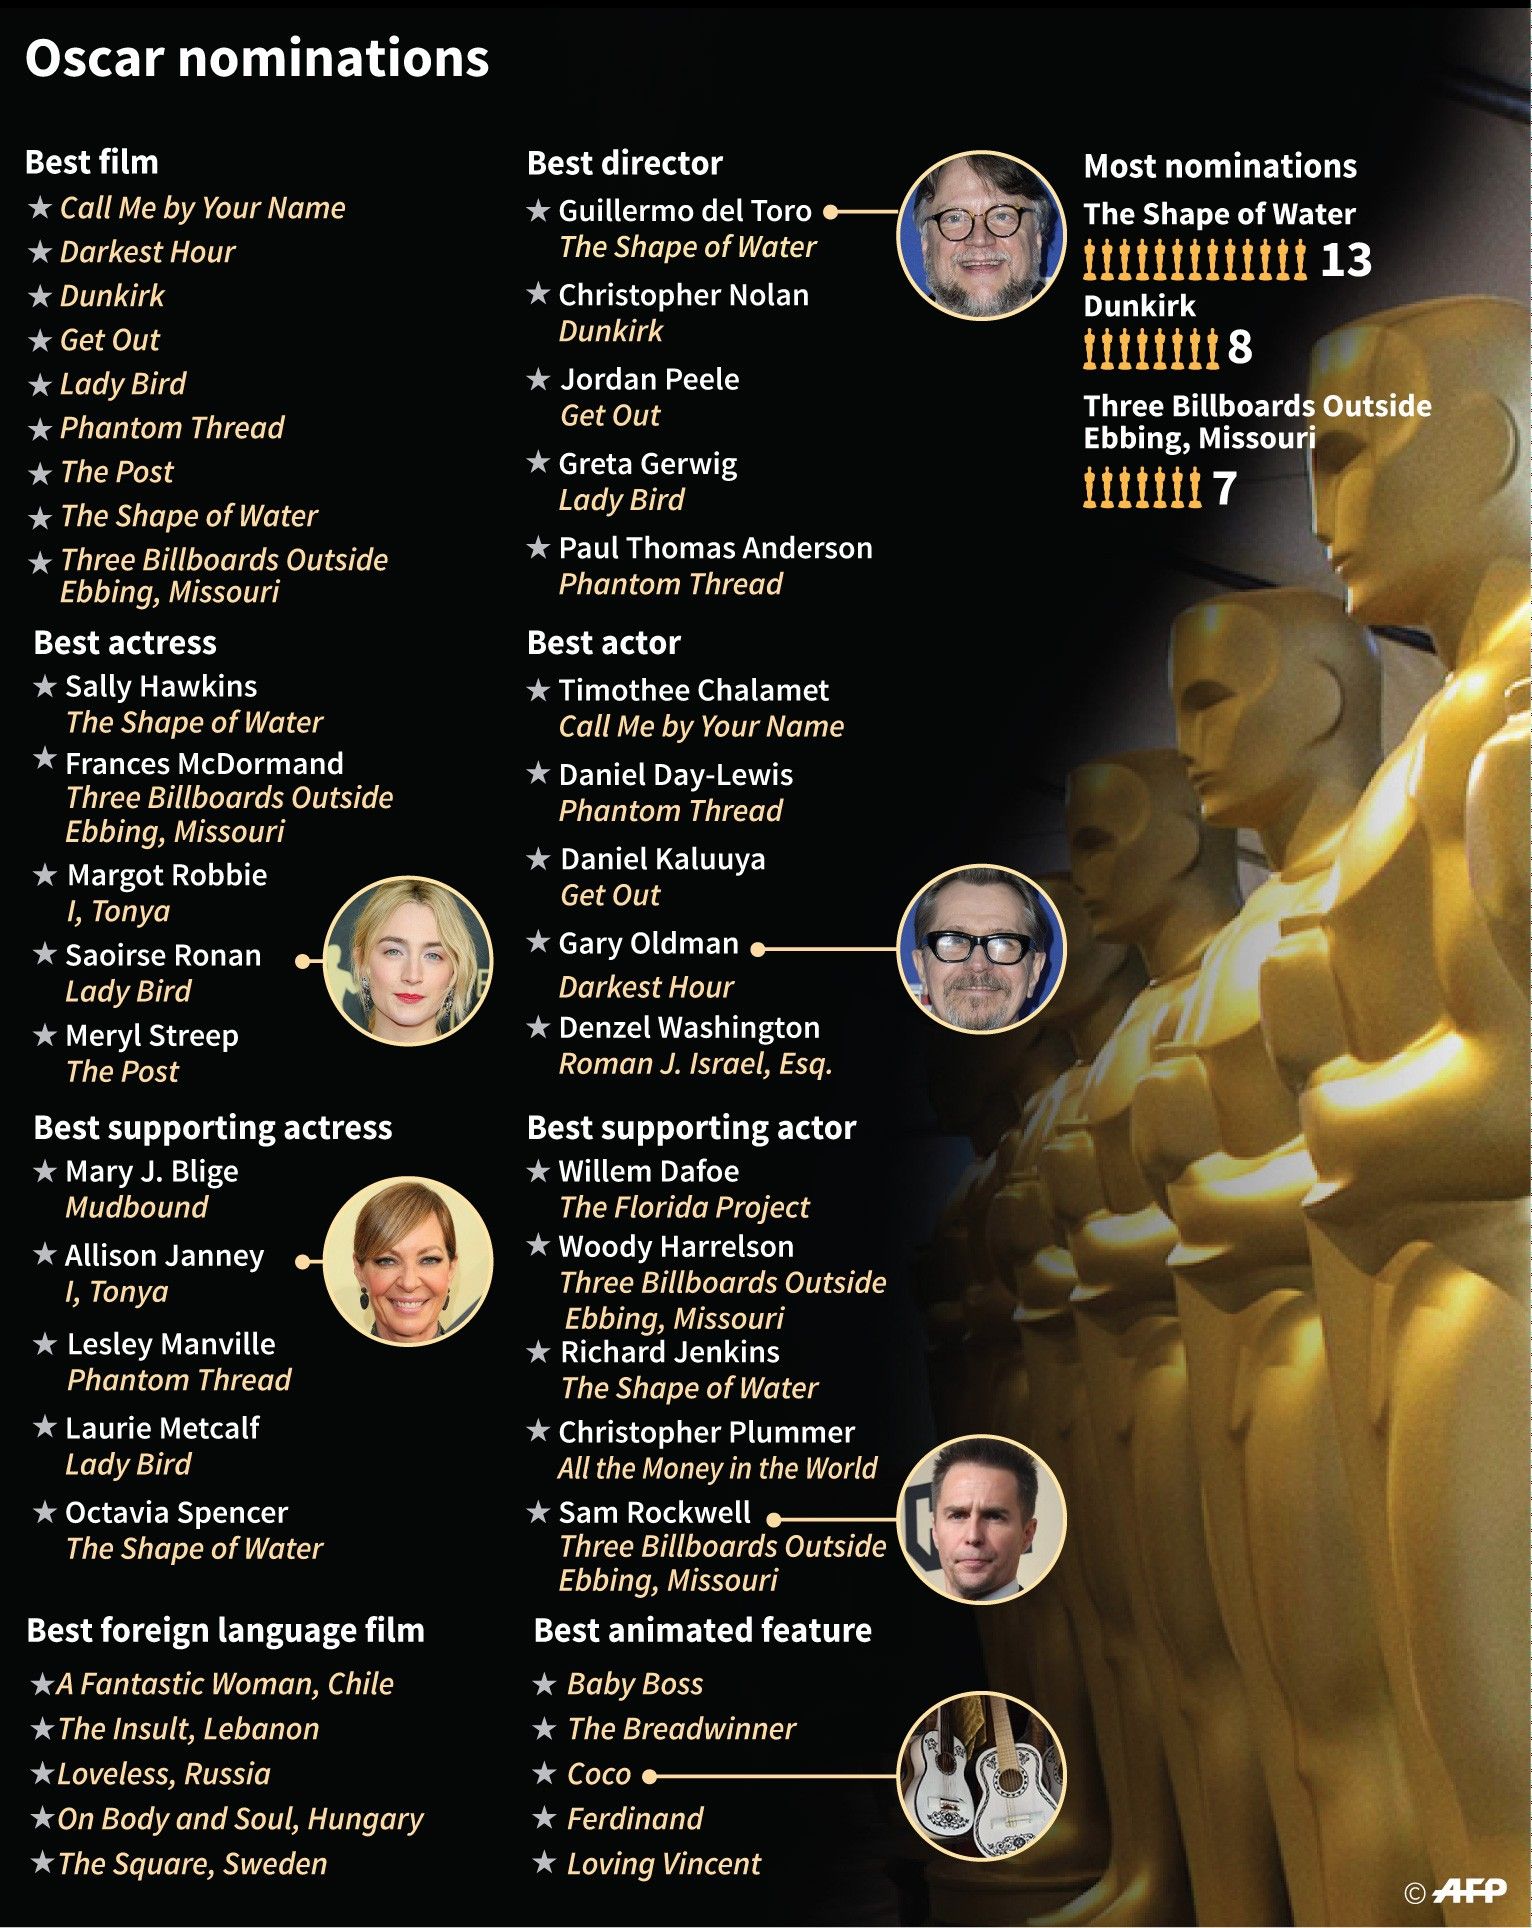 Oscar nominees in main categories